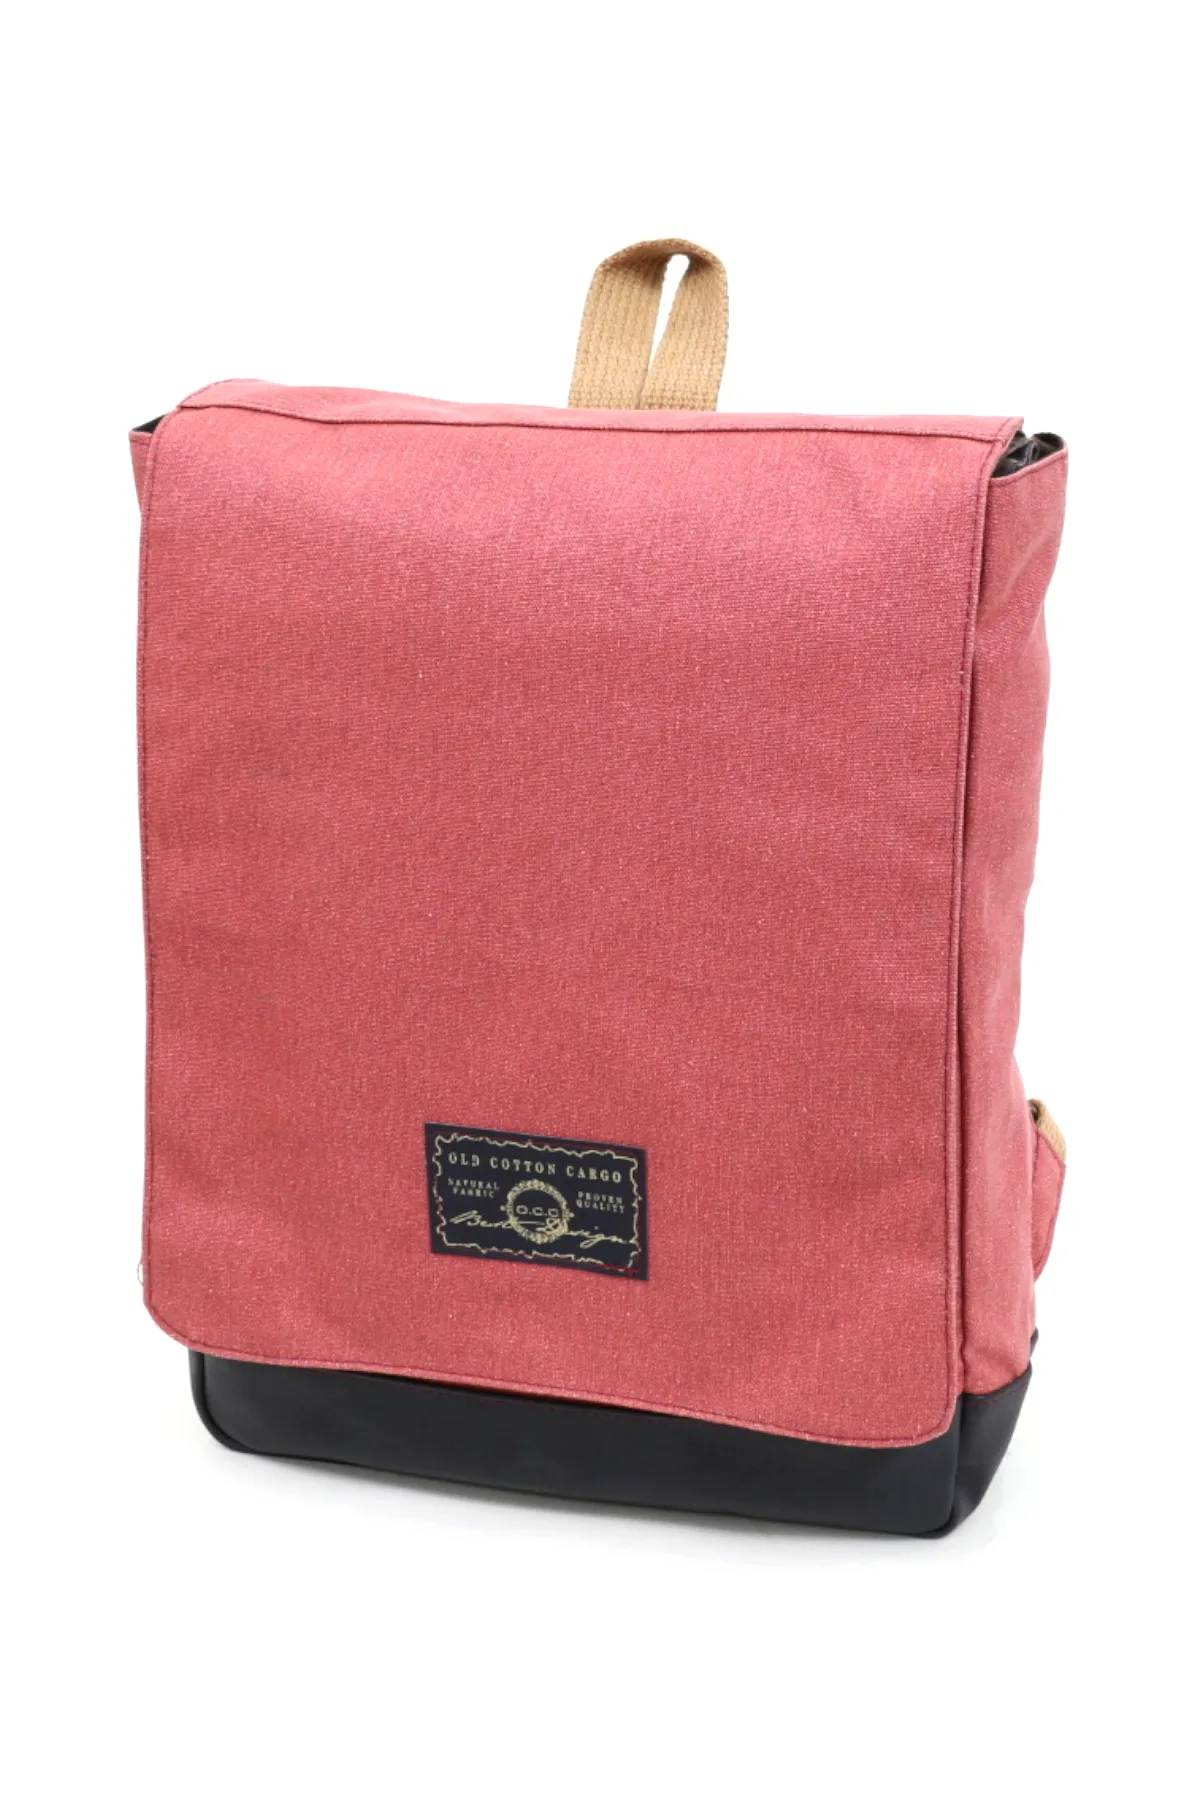 Canvas Backpack Shoulder Bag Vintage Daypack Messenger Bag Fit for 15 inches Laptop for Urban Travel School Daily Outdoor